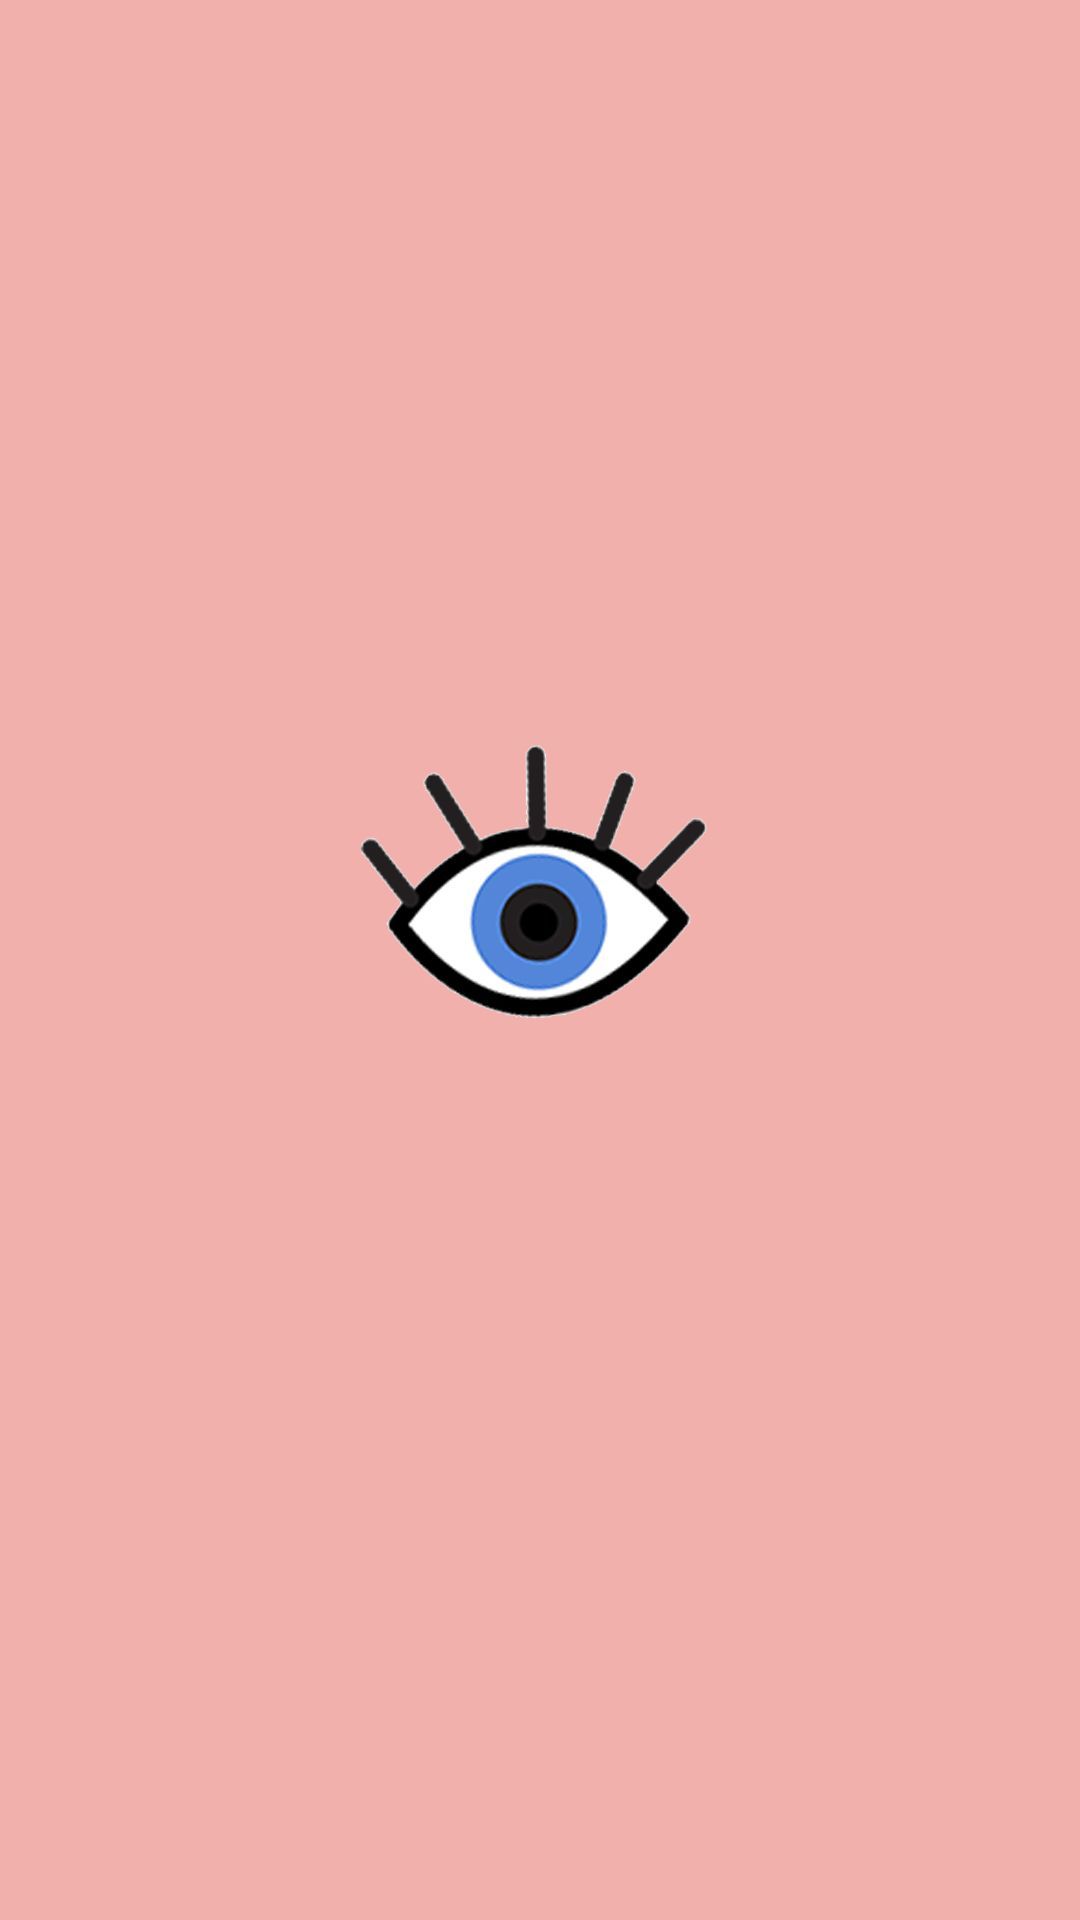 A blue eye on a pink background - Eyes